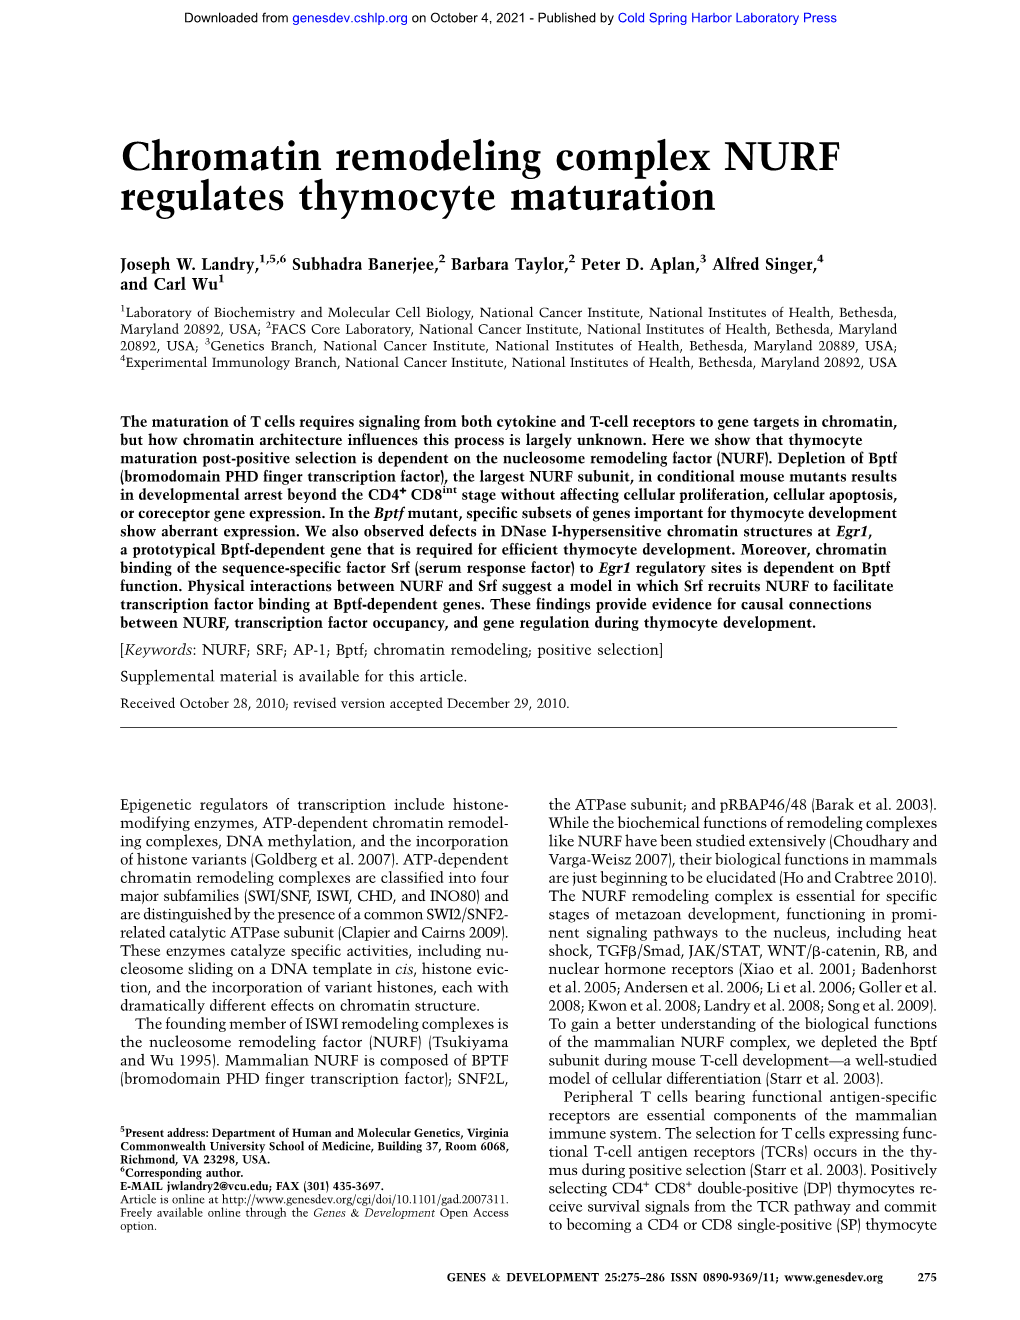 Chromatin Remodeling Complex NURF Regulates Thymocyte Maturation